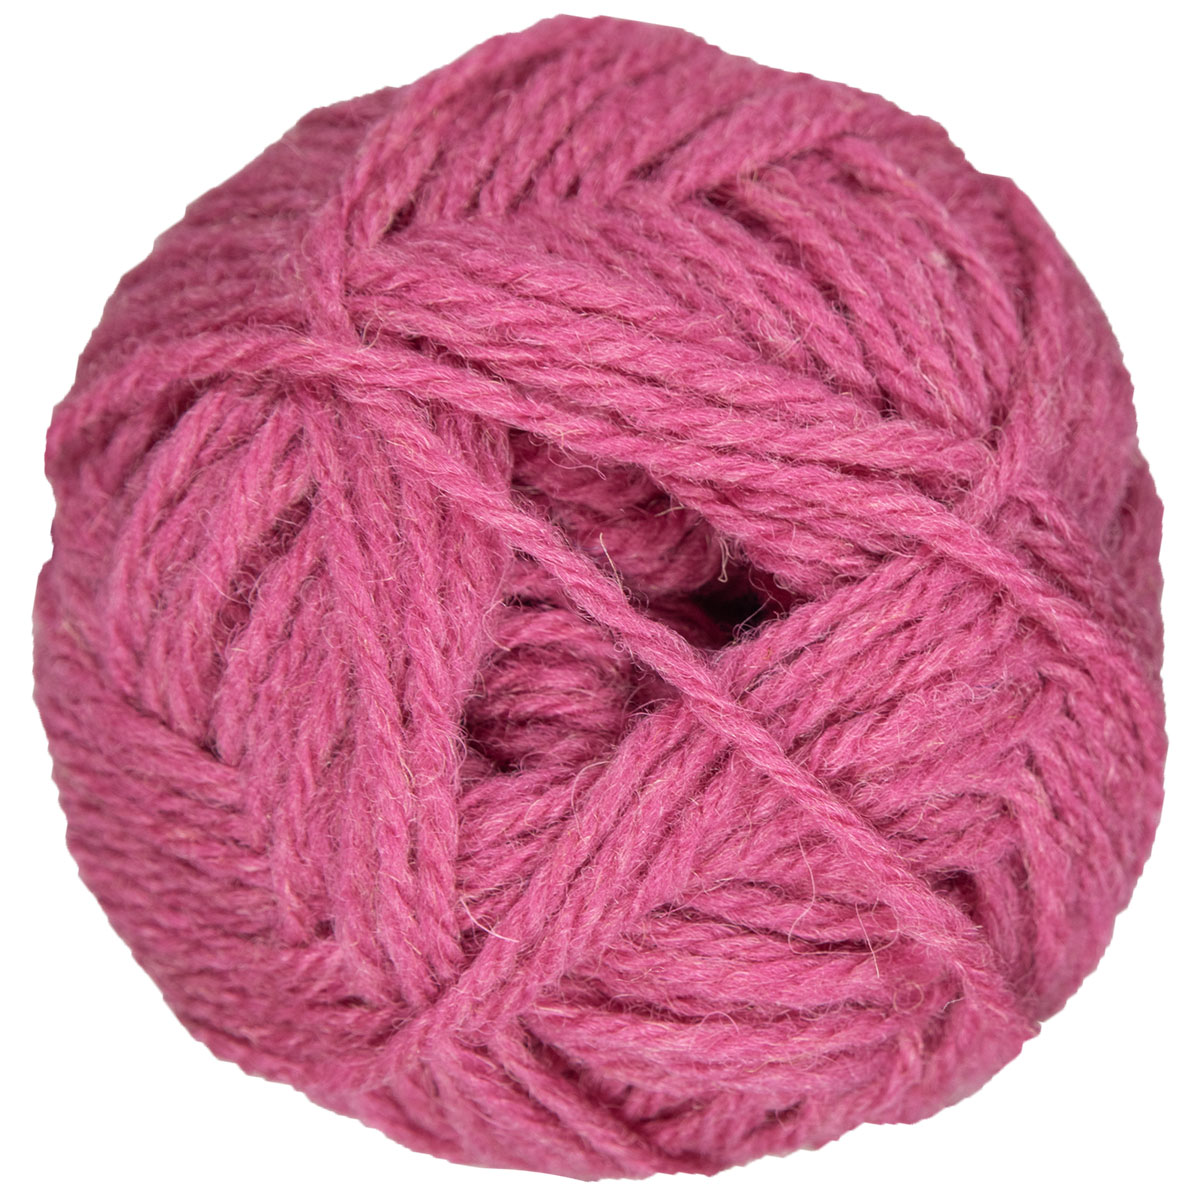 WOOL Yarn 100%wool for Knitting, Crochet, Lipstick Pink 540 